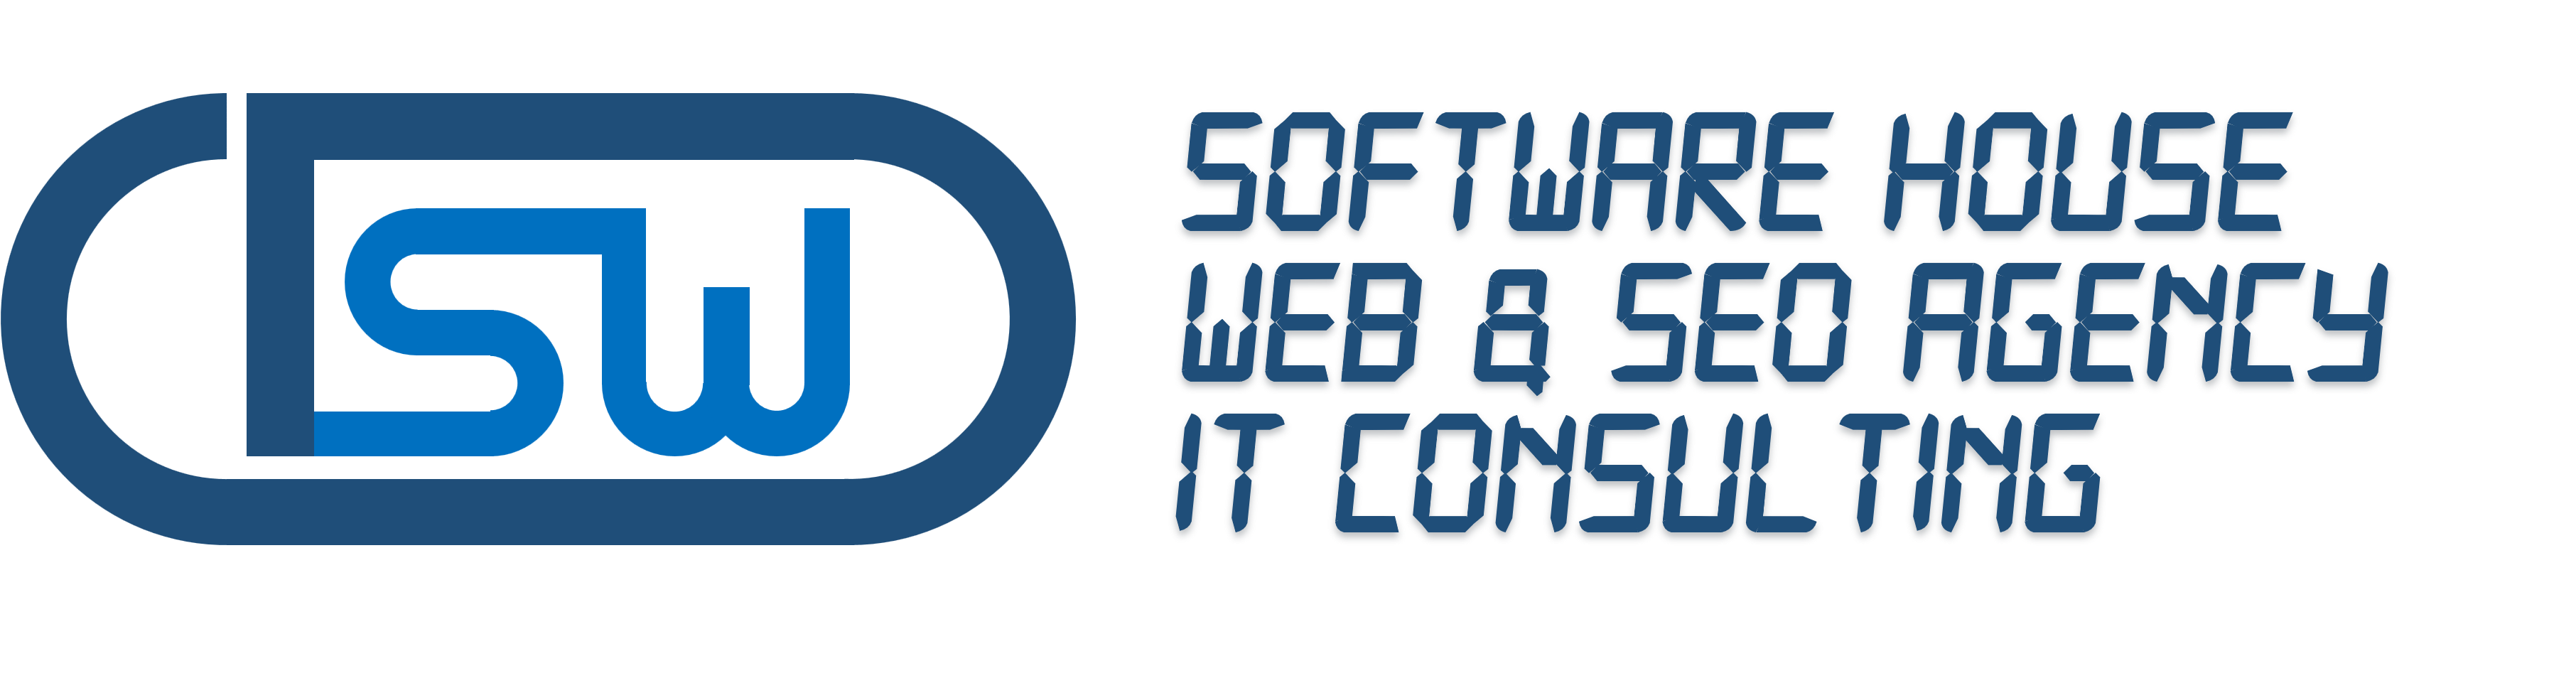 CDSW SAS - Software house e Web agency